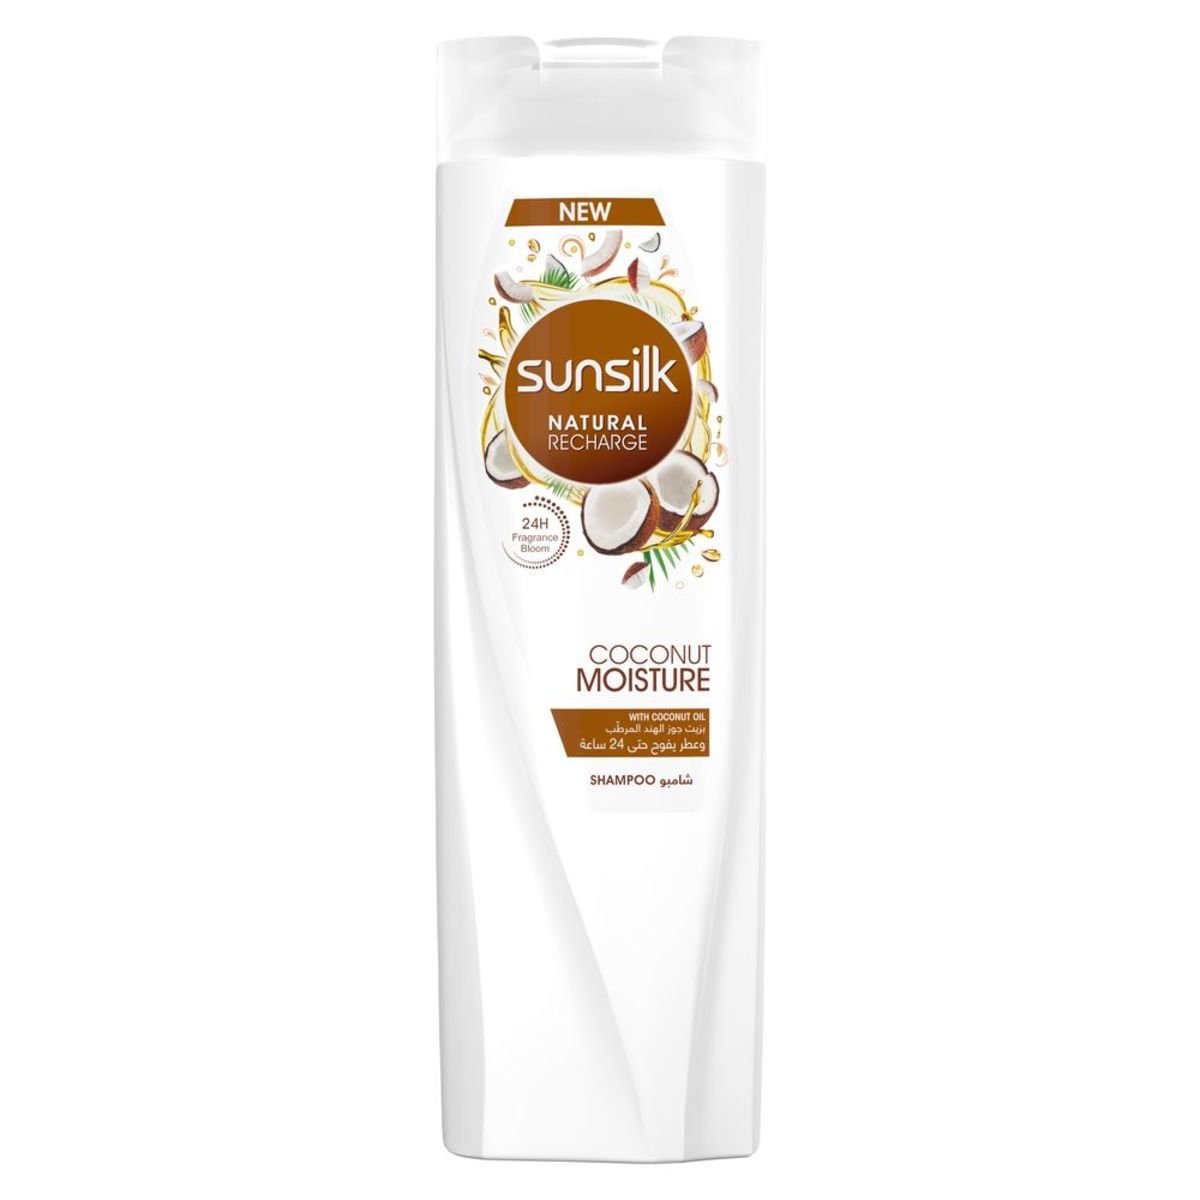 Sunsilk Coconut Moisture Shampoo, 400 ml